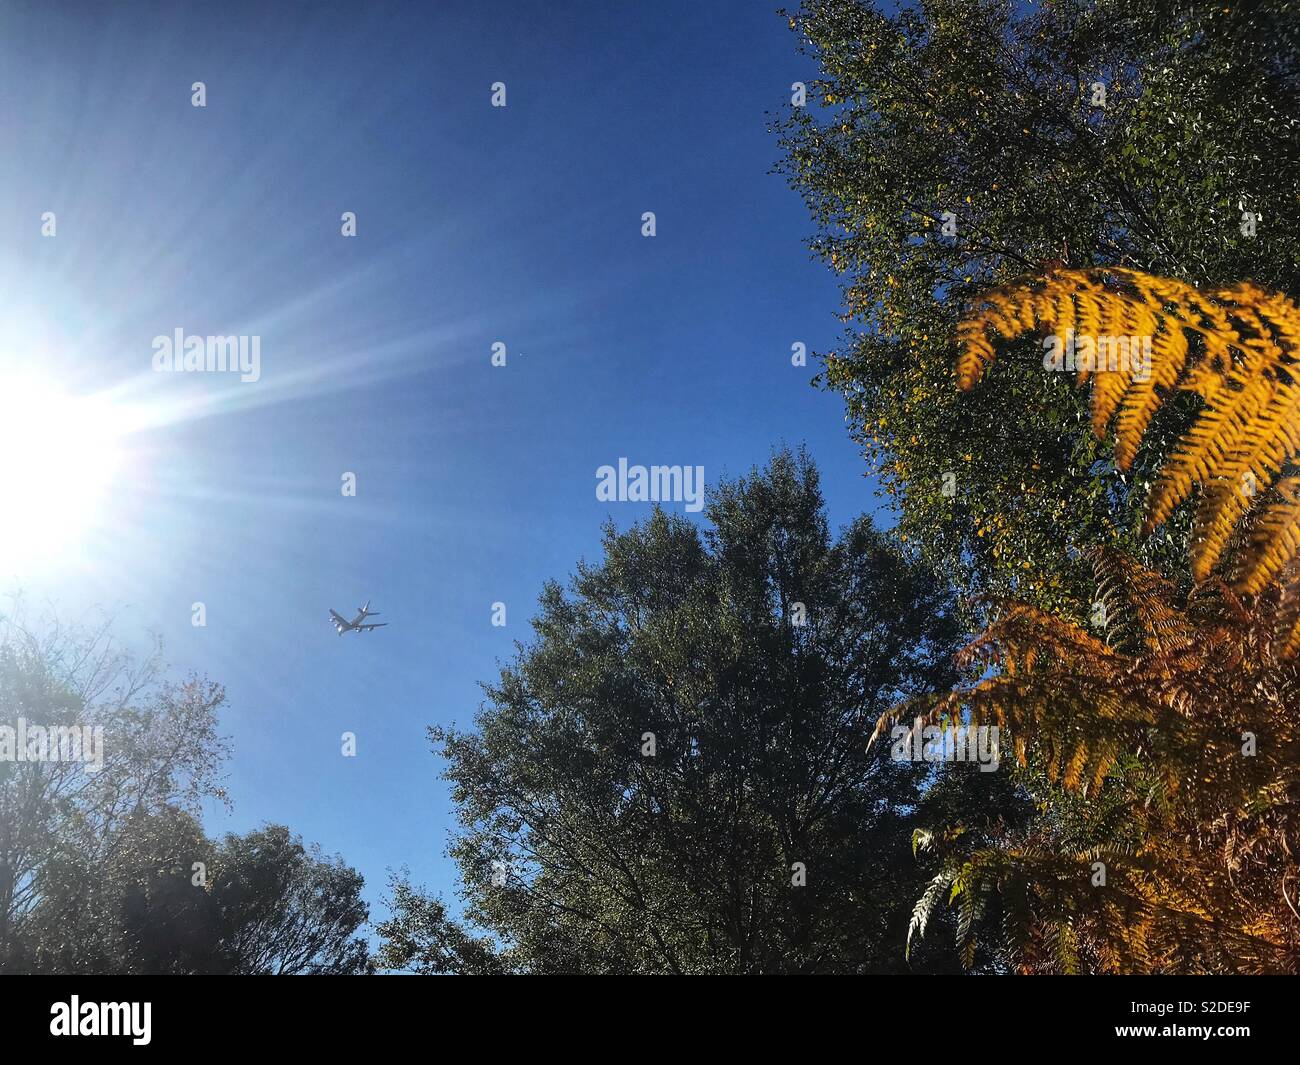 Aeroplane flying overhead on a sunny day Stock Photo